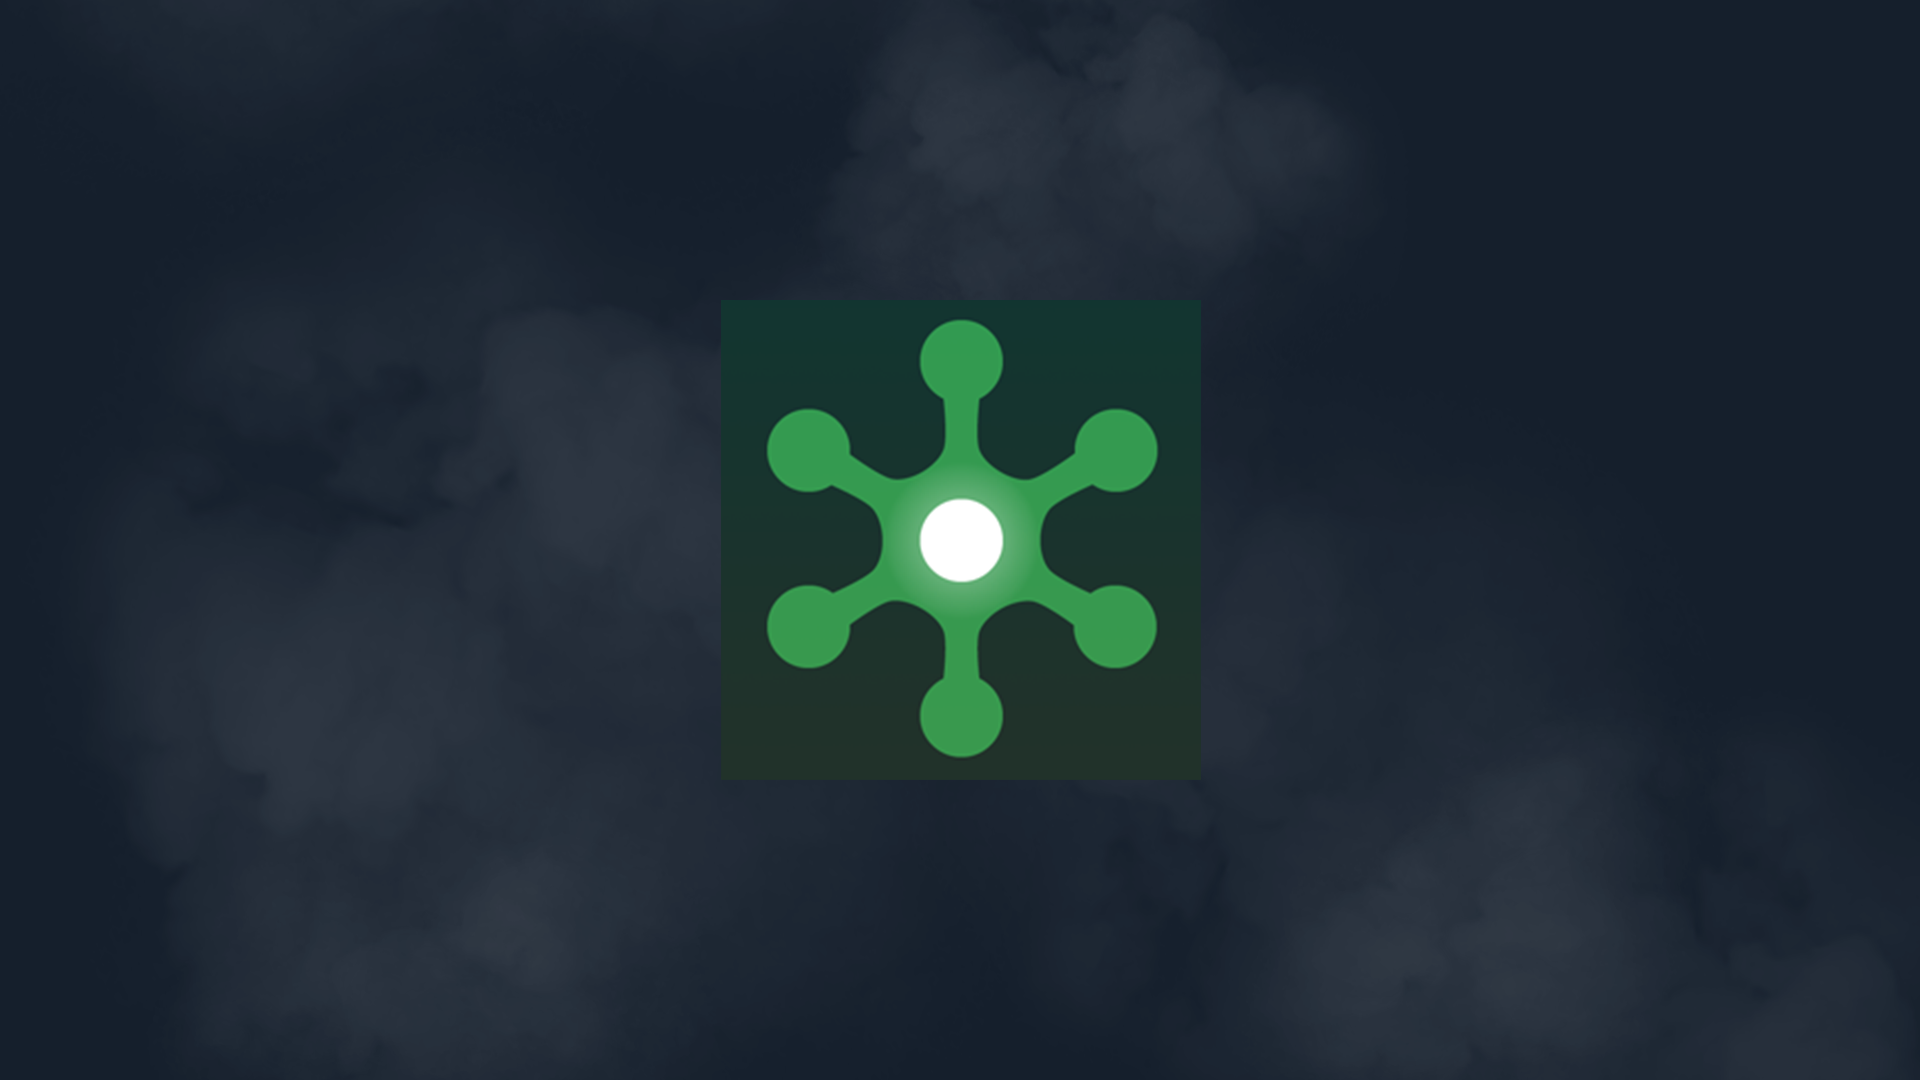 Icon for Green neuron